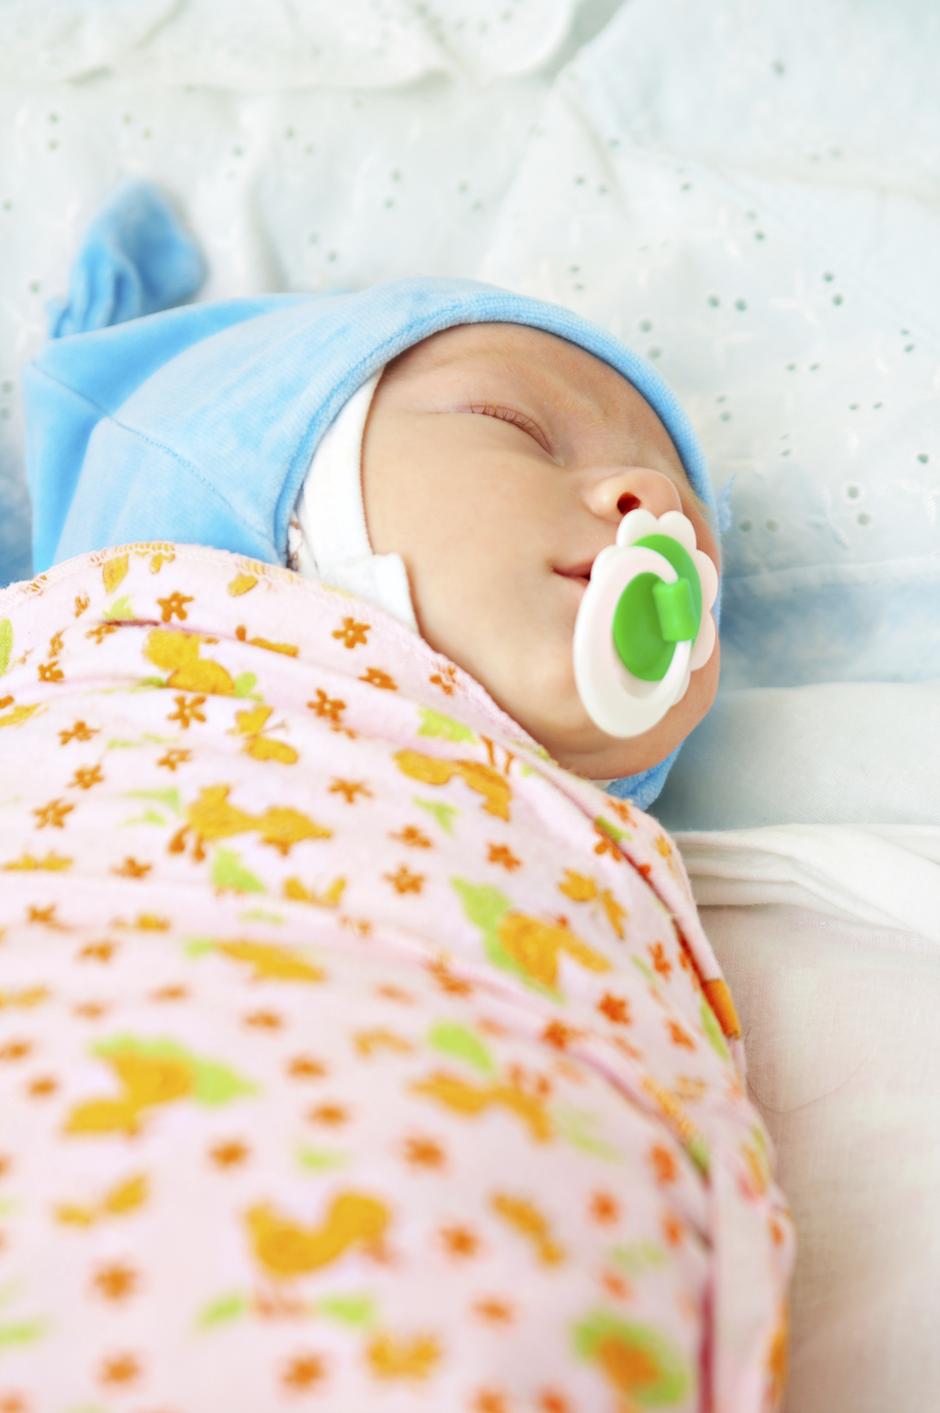 povijanje spavanje beba | Author: Thinkstock